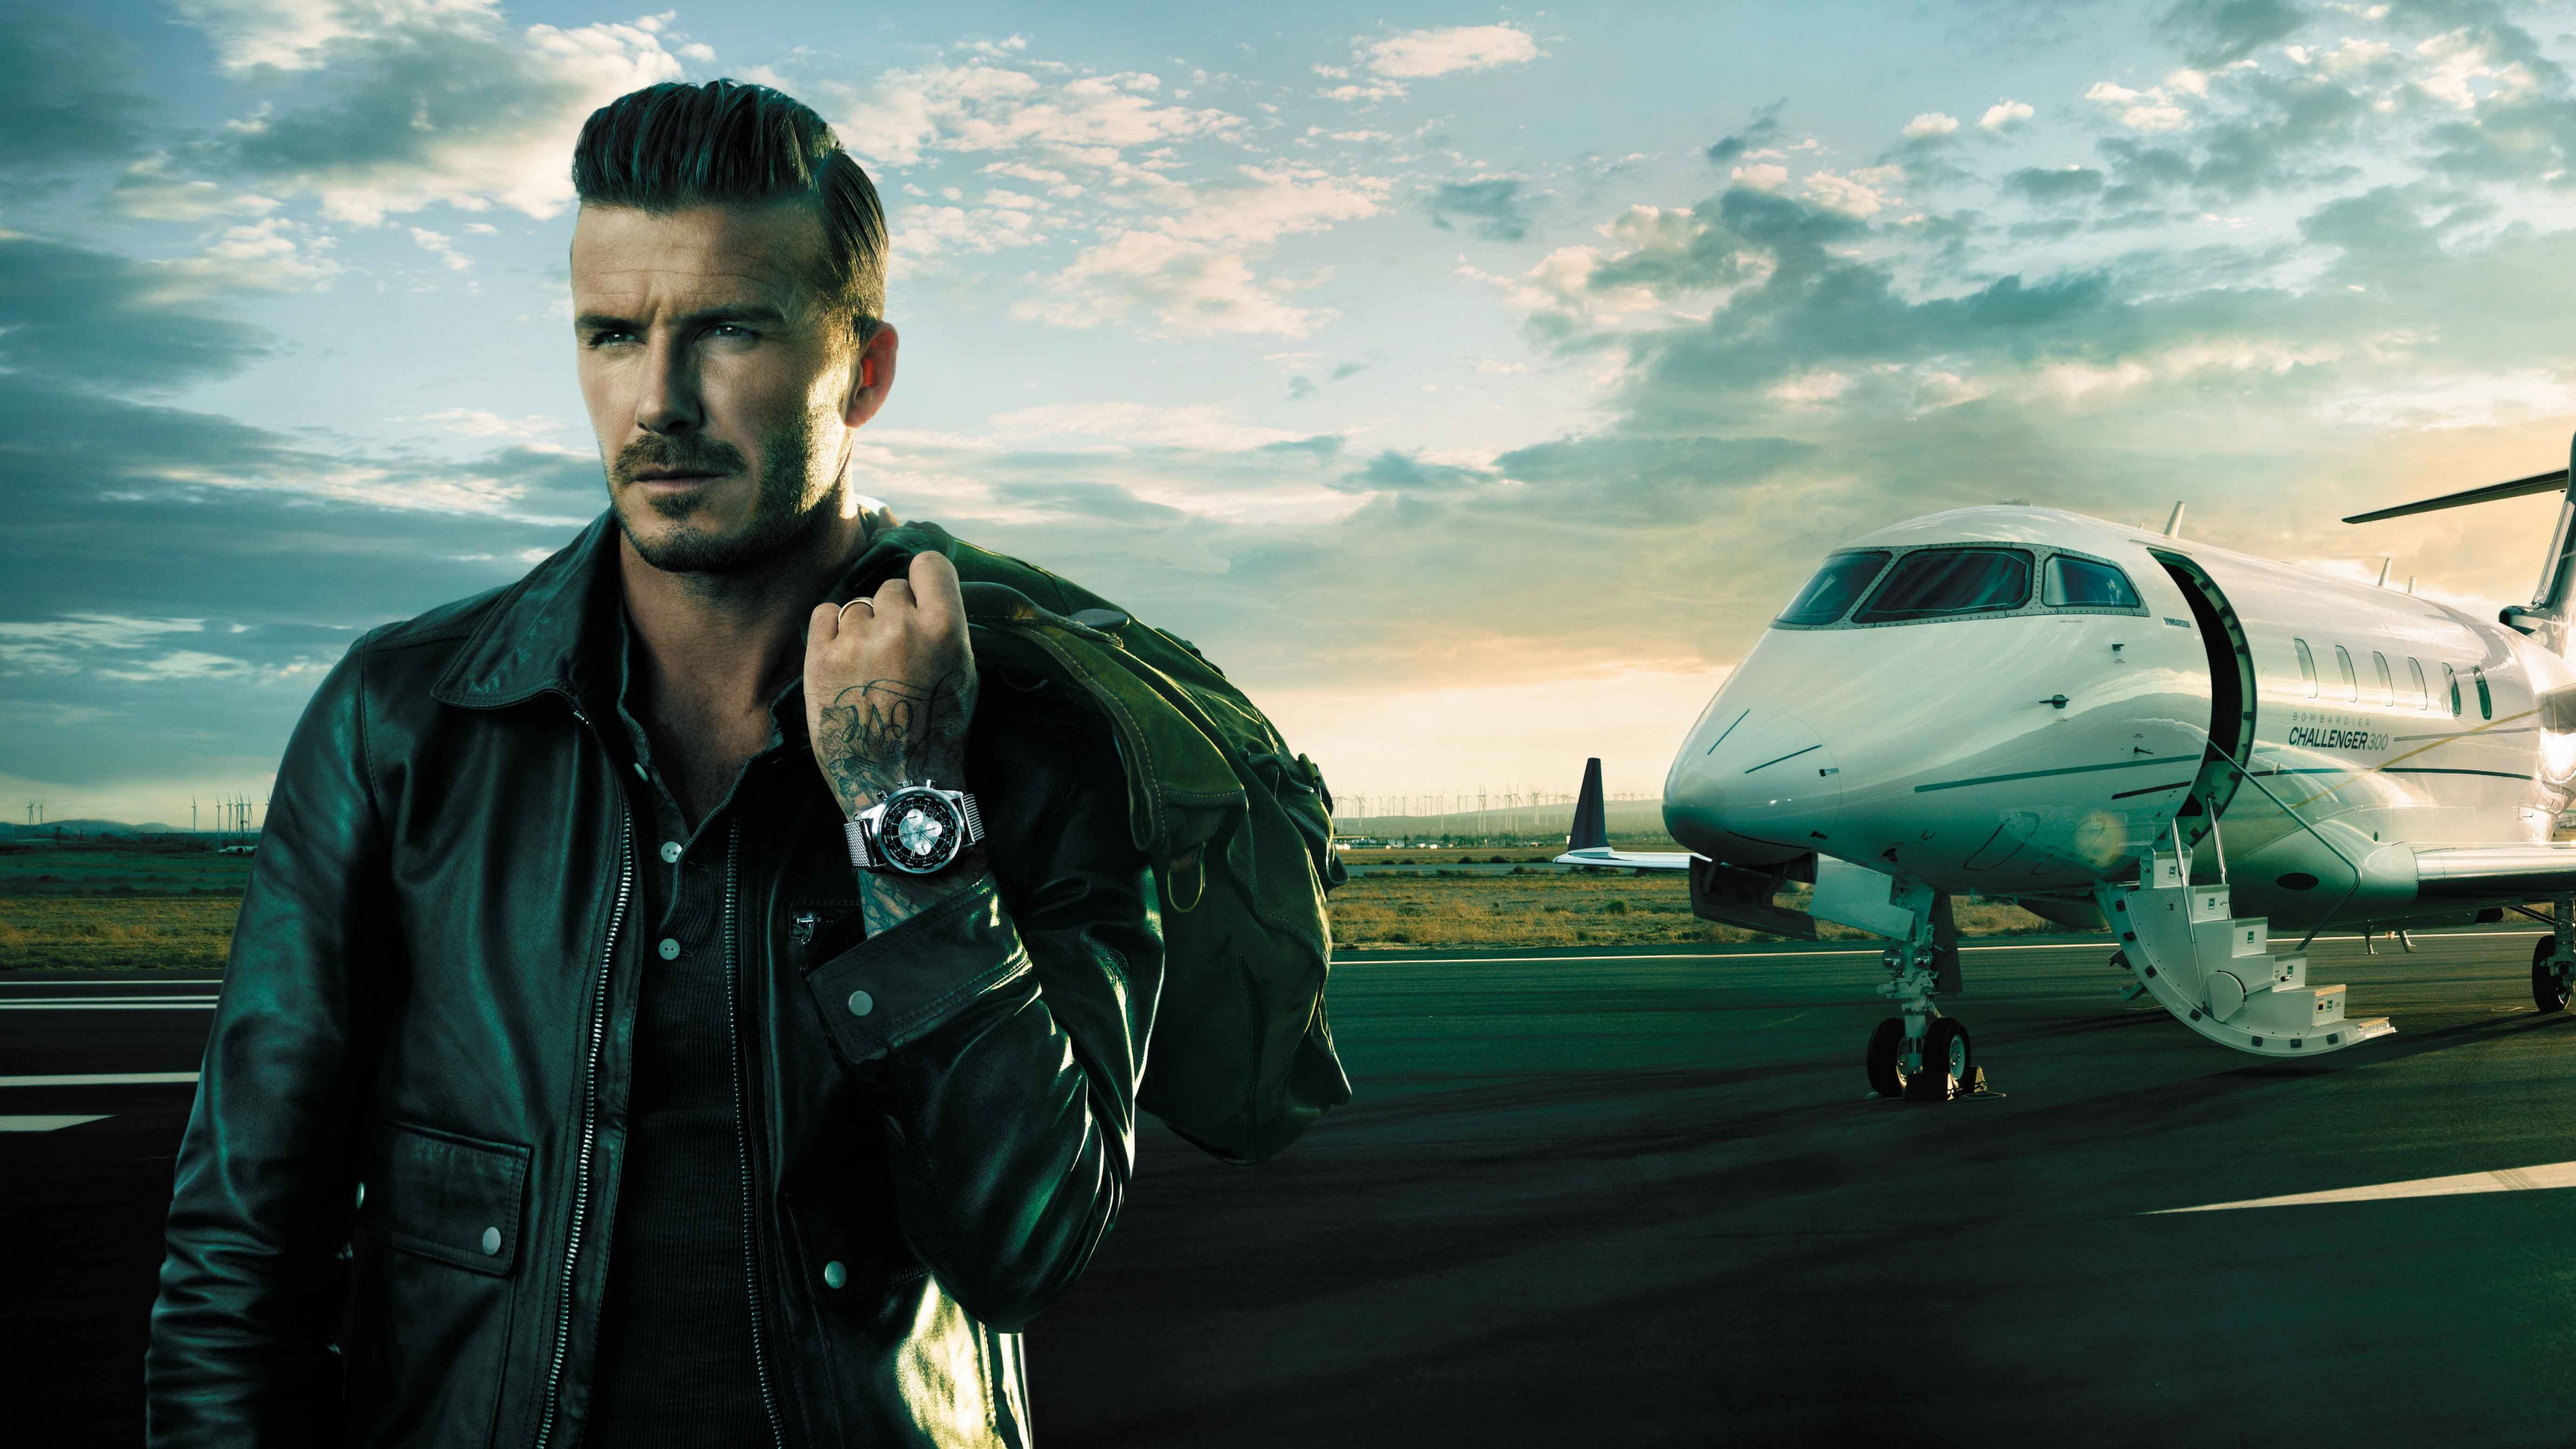 David Beckham, Breitling SA, Aerospace Engineering, Airplane, Air Travel. Wallpaper in 3840x2160 Resolution